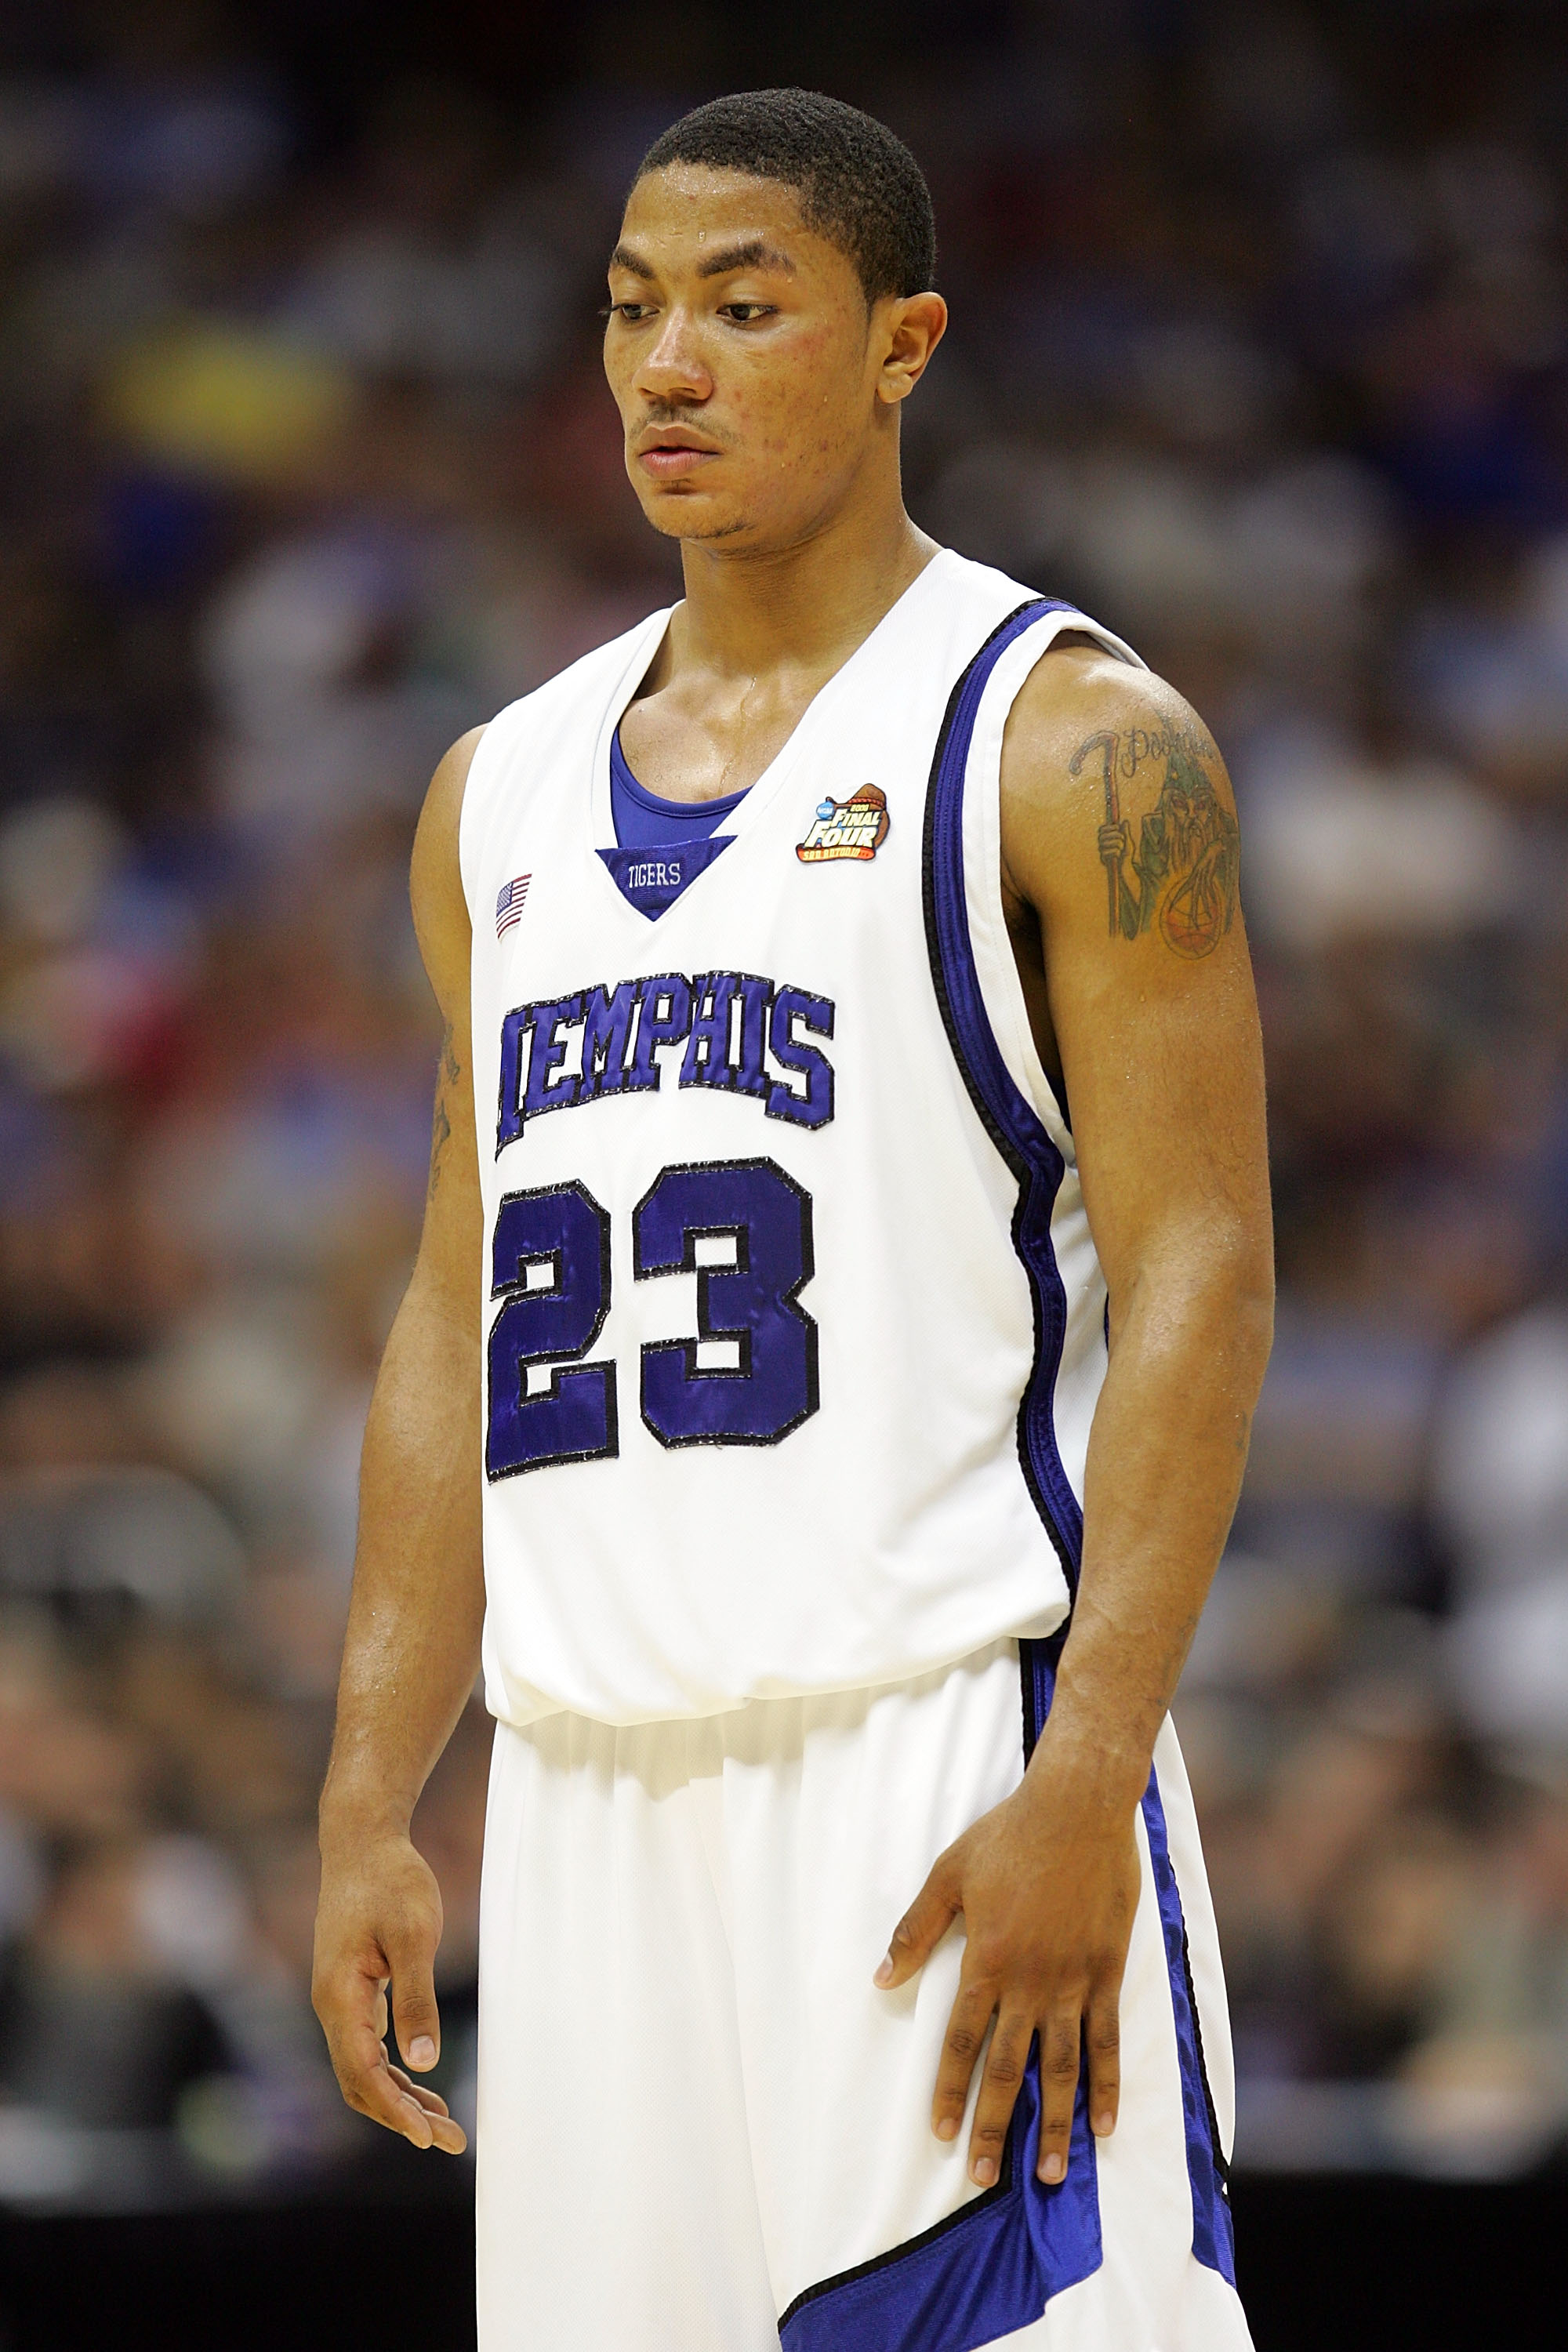 Derrick Rose #23 Jersey of Memphis Tigers Basketball Team - Sizes